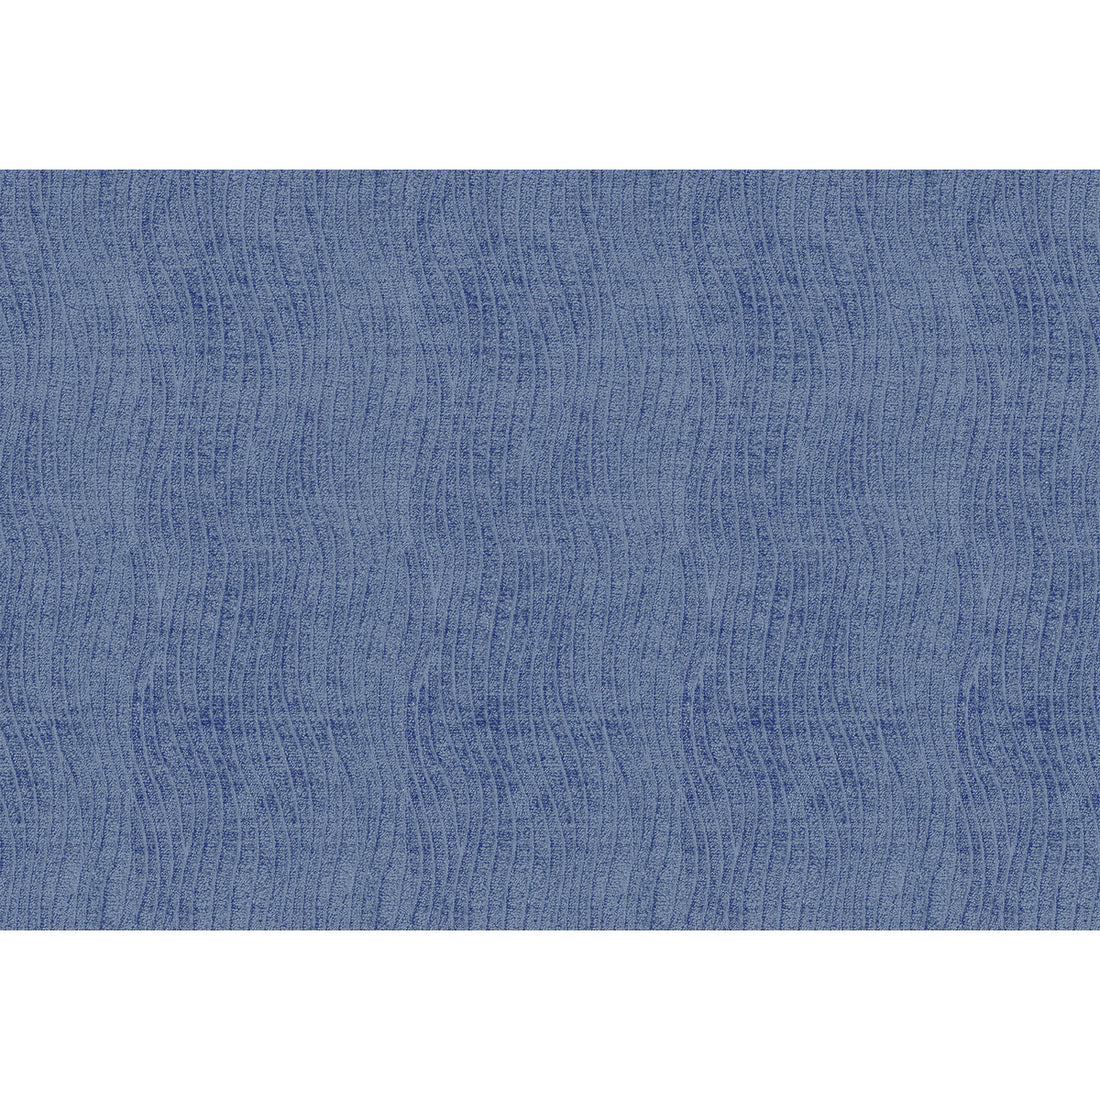 Kravet Smart fabric in 34296-5 color - pattern 34296.5.0 - by Kravet Smart